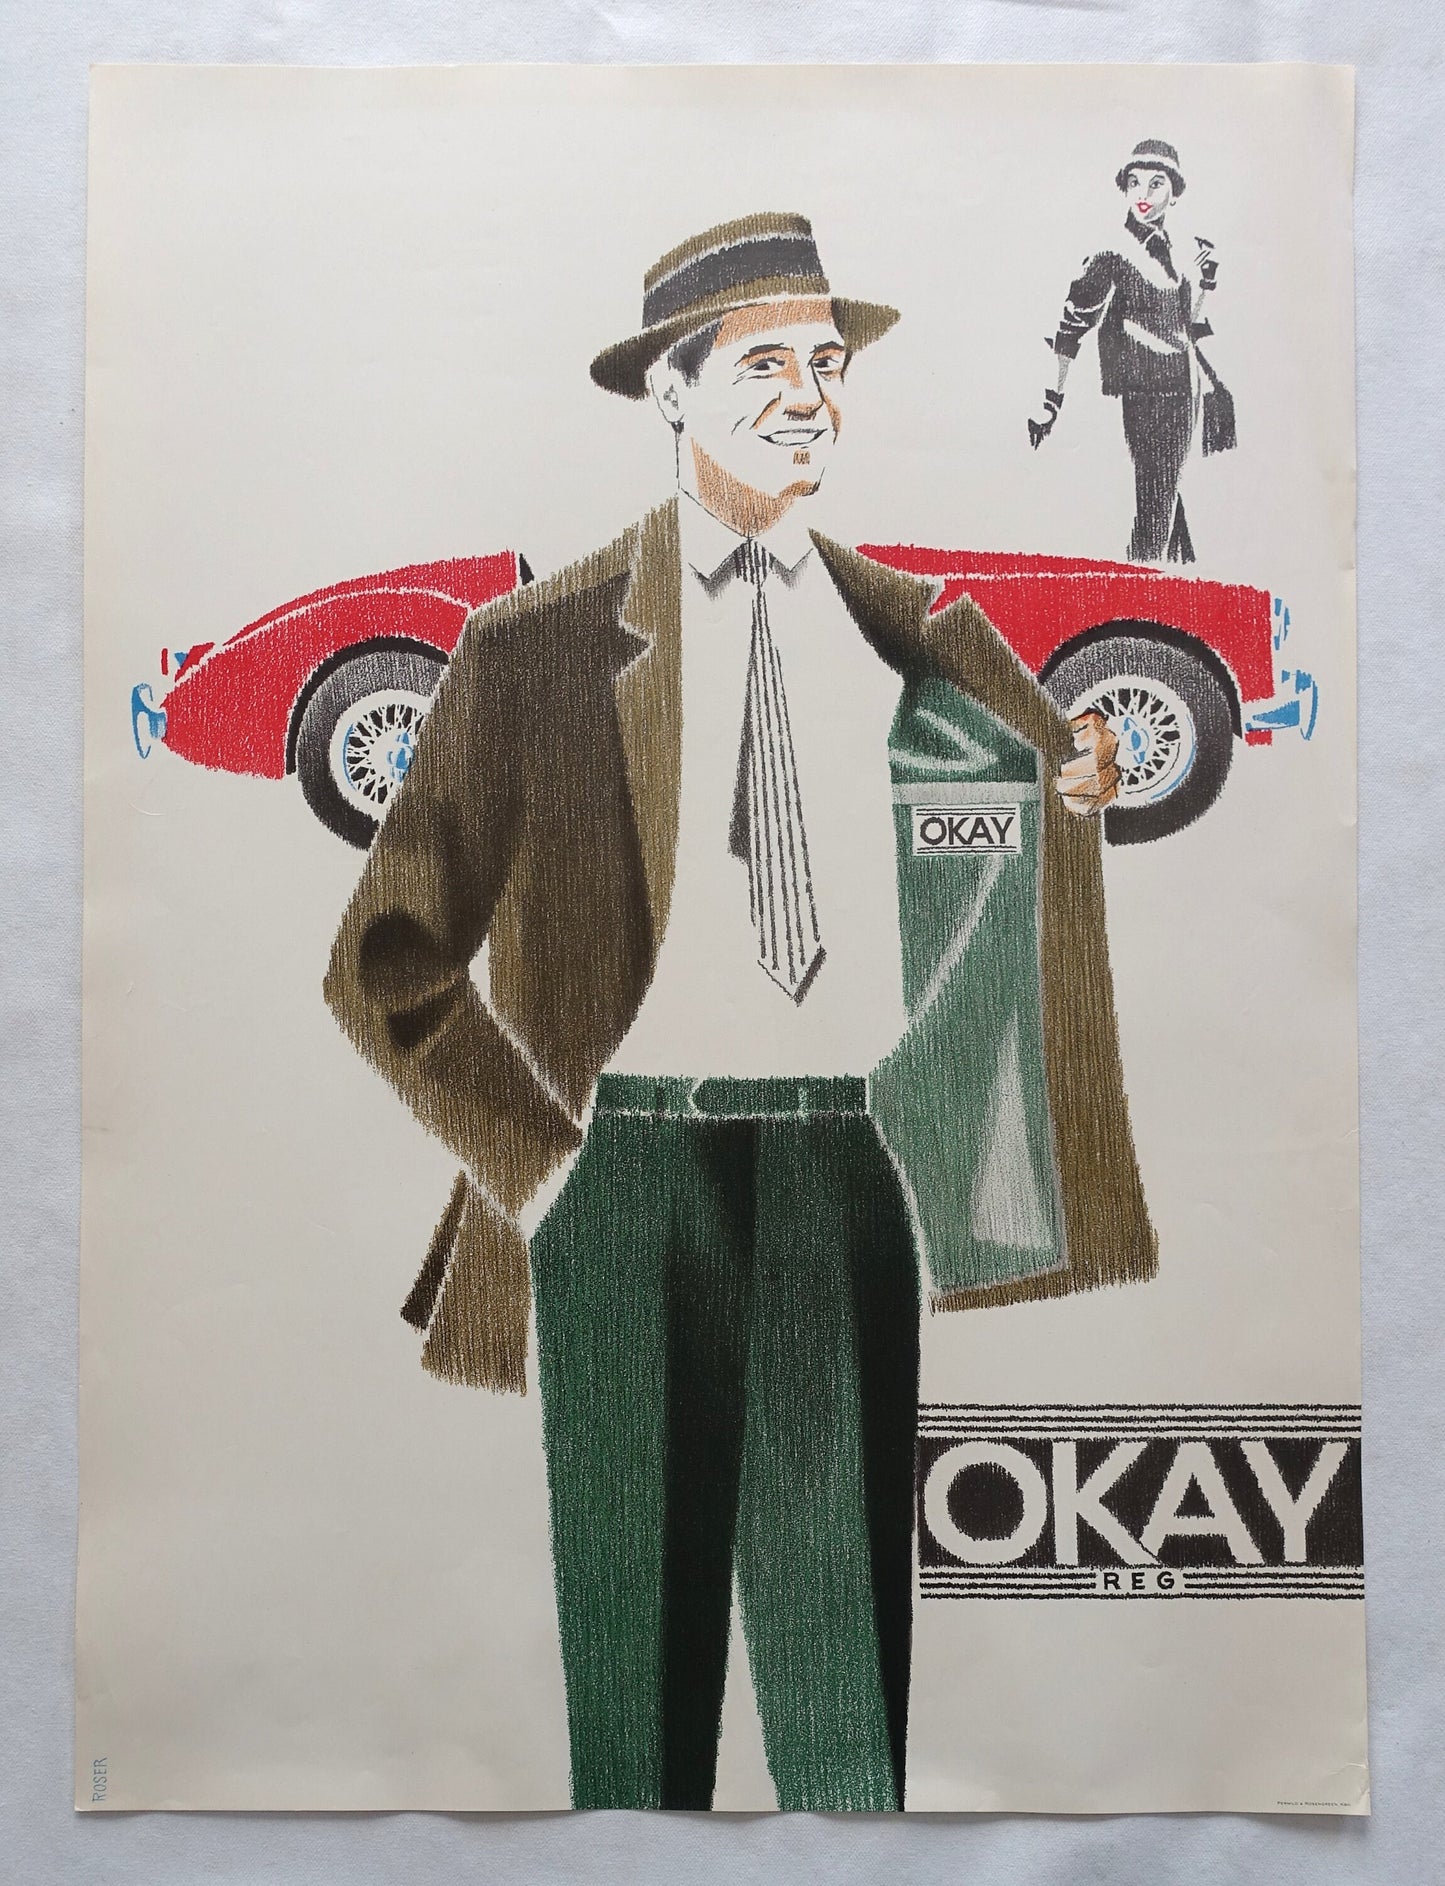 1950s Suit Brand Okay Advertisement - Original Vintage Poster